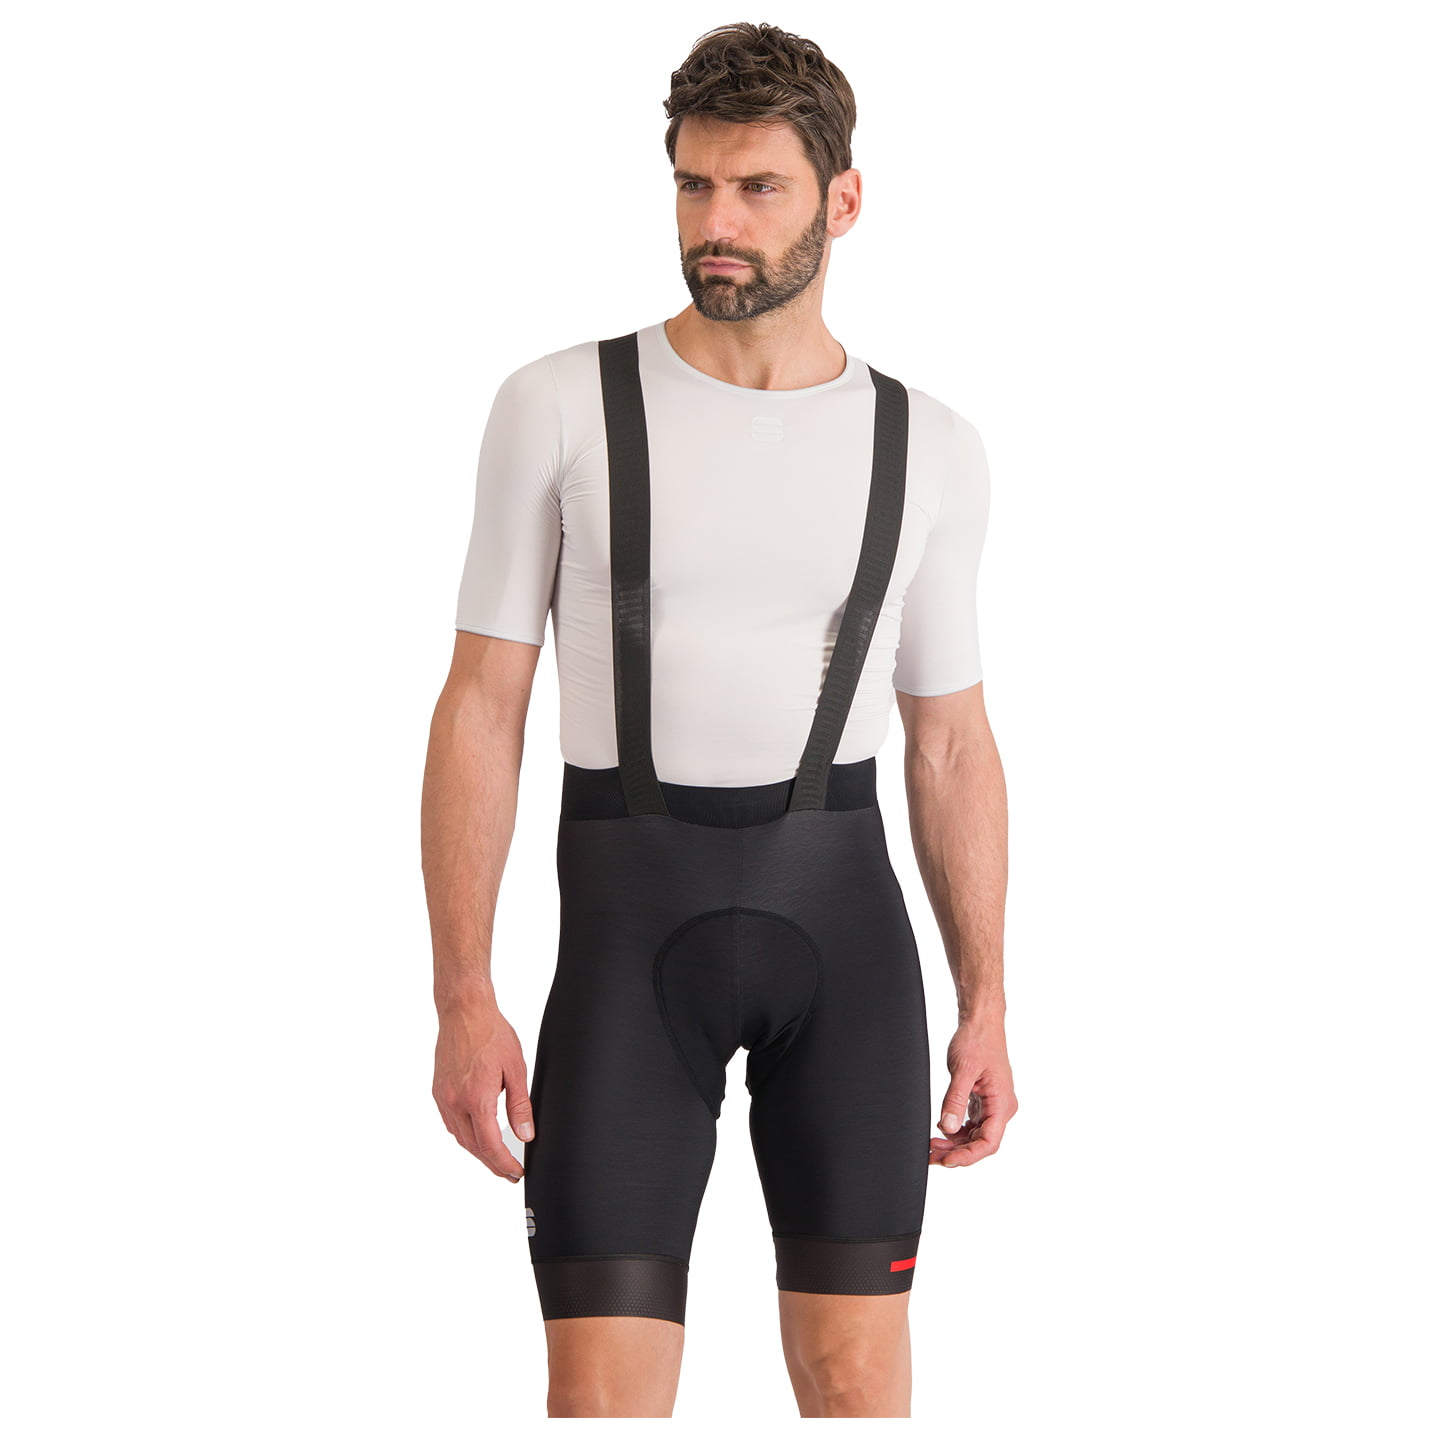 SPORTFUL Fiandre Bib Shorts Bib Shorts, for men, size 2XL, Cycle shorts, Cycling clothing